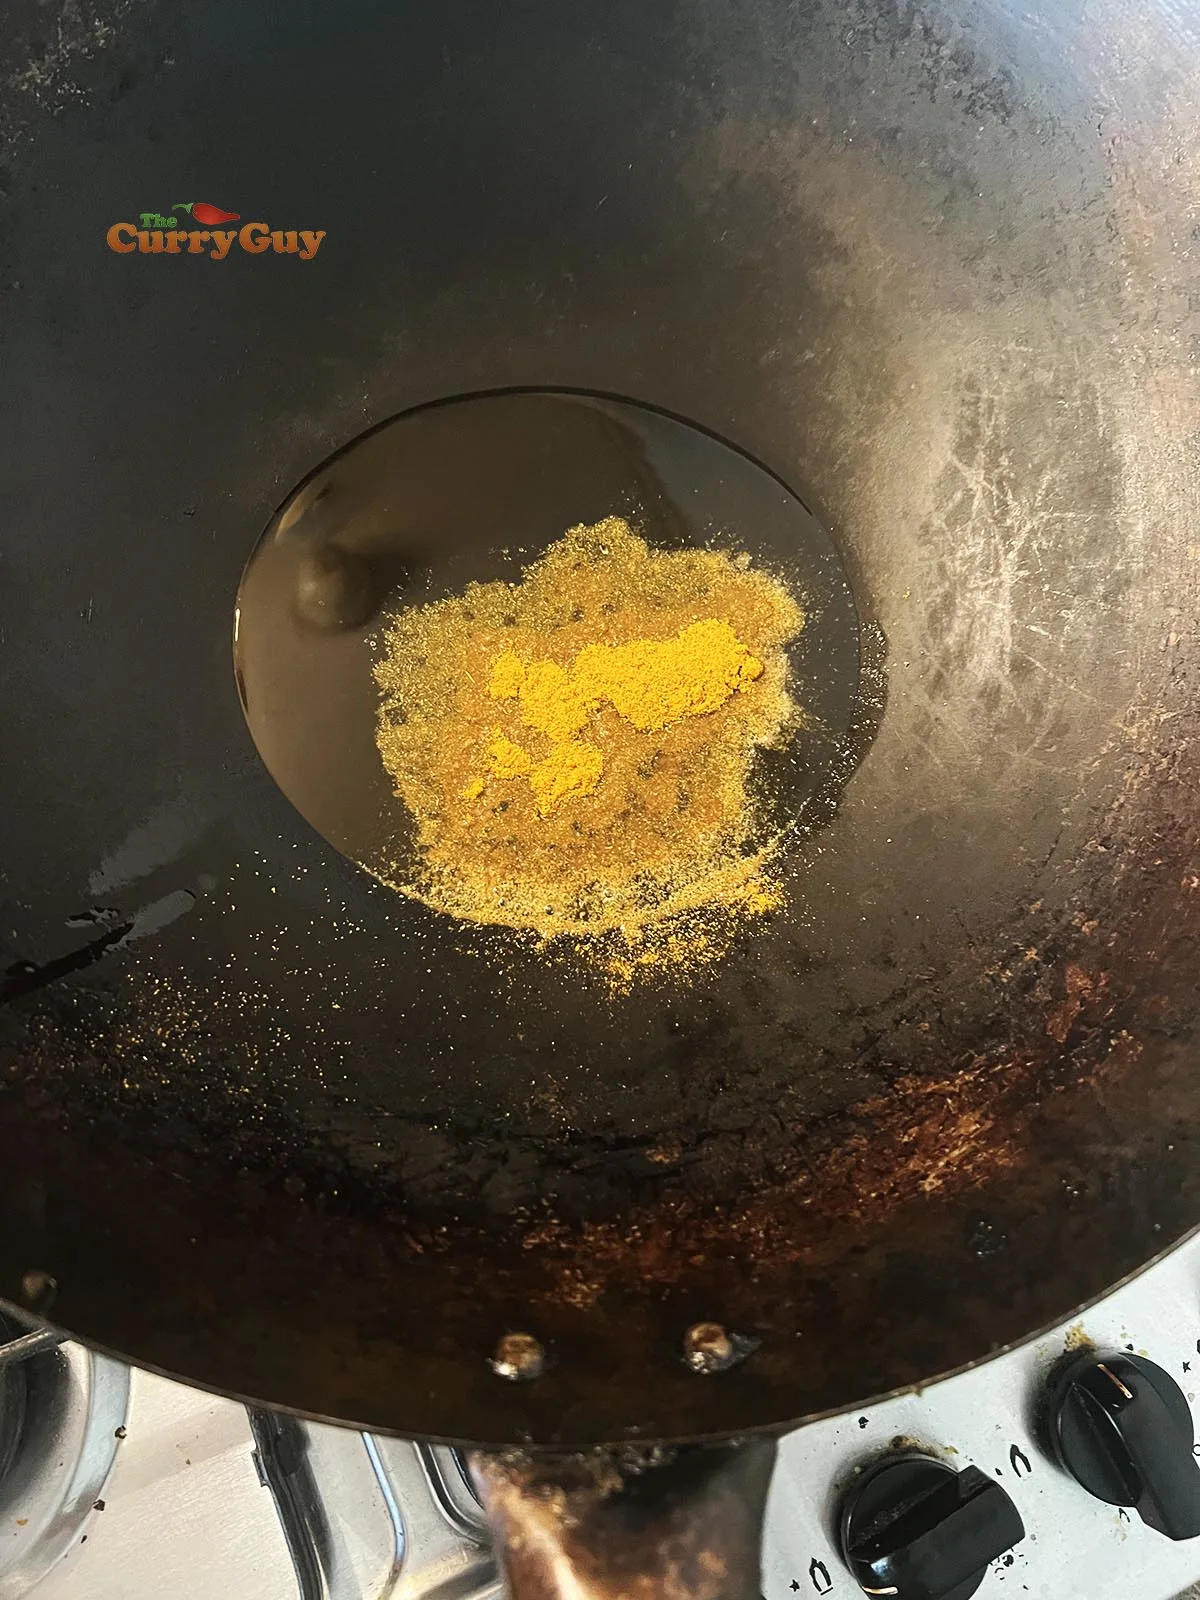 Frying curry powder in a wok